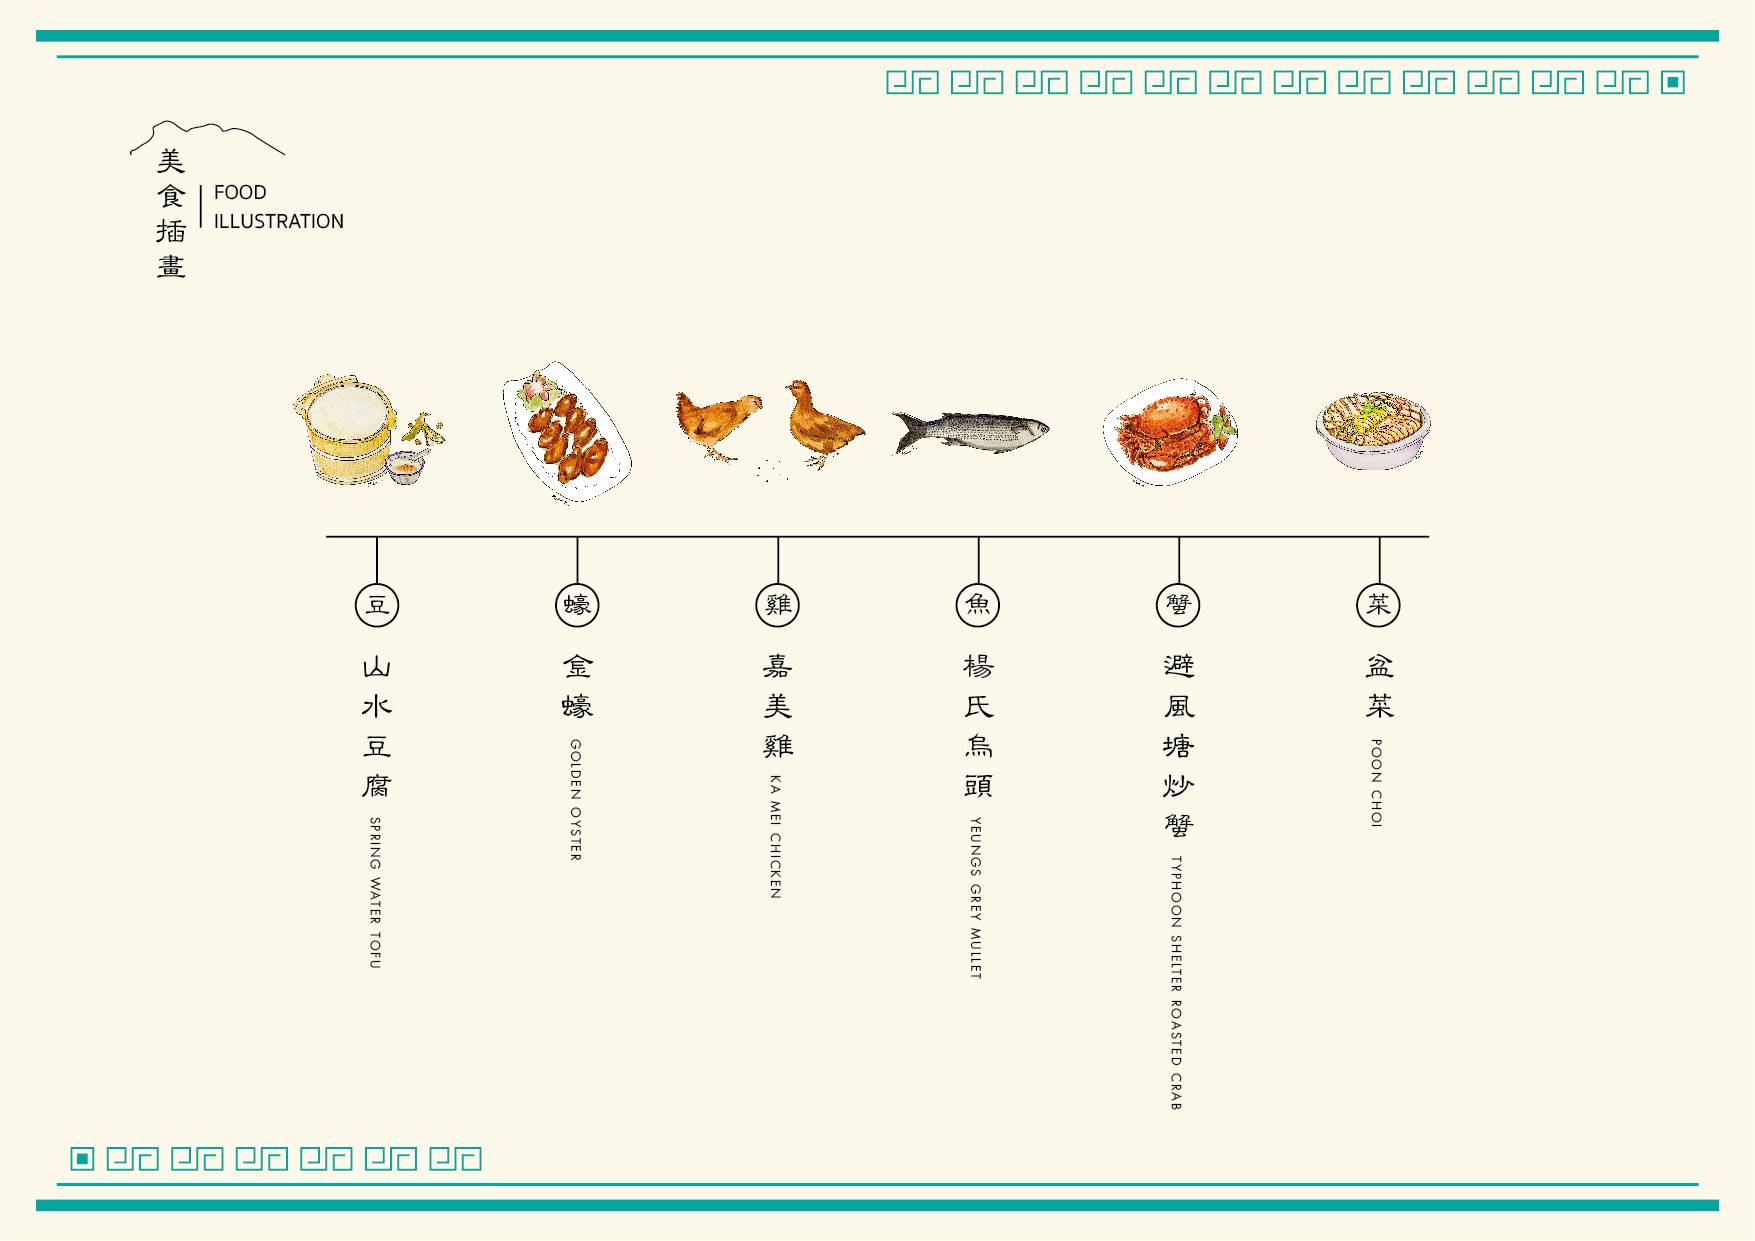  Hong Kong Delicacies rebranding for traditional food illustration